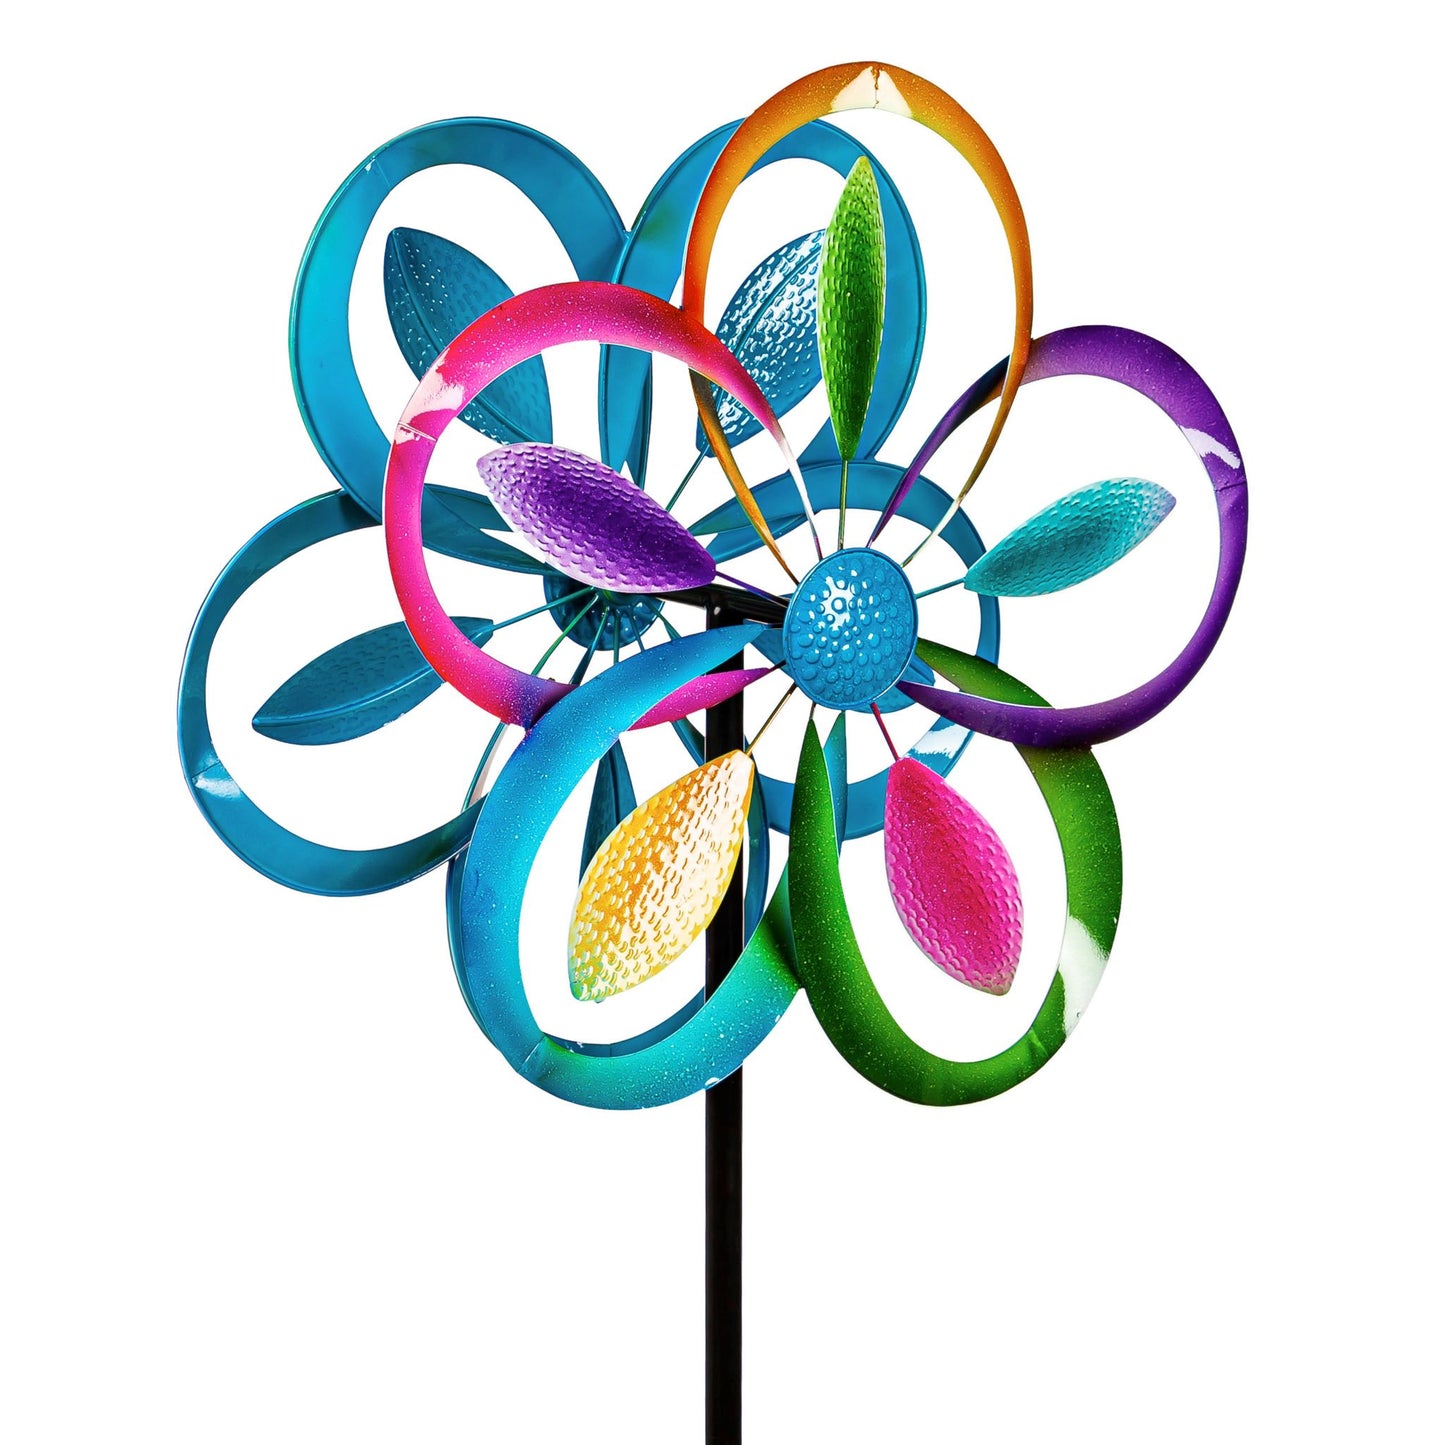 75"H Wind Spinner, Multi-Color Rings